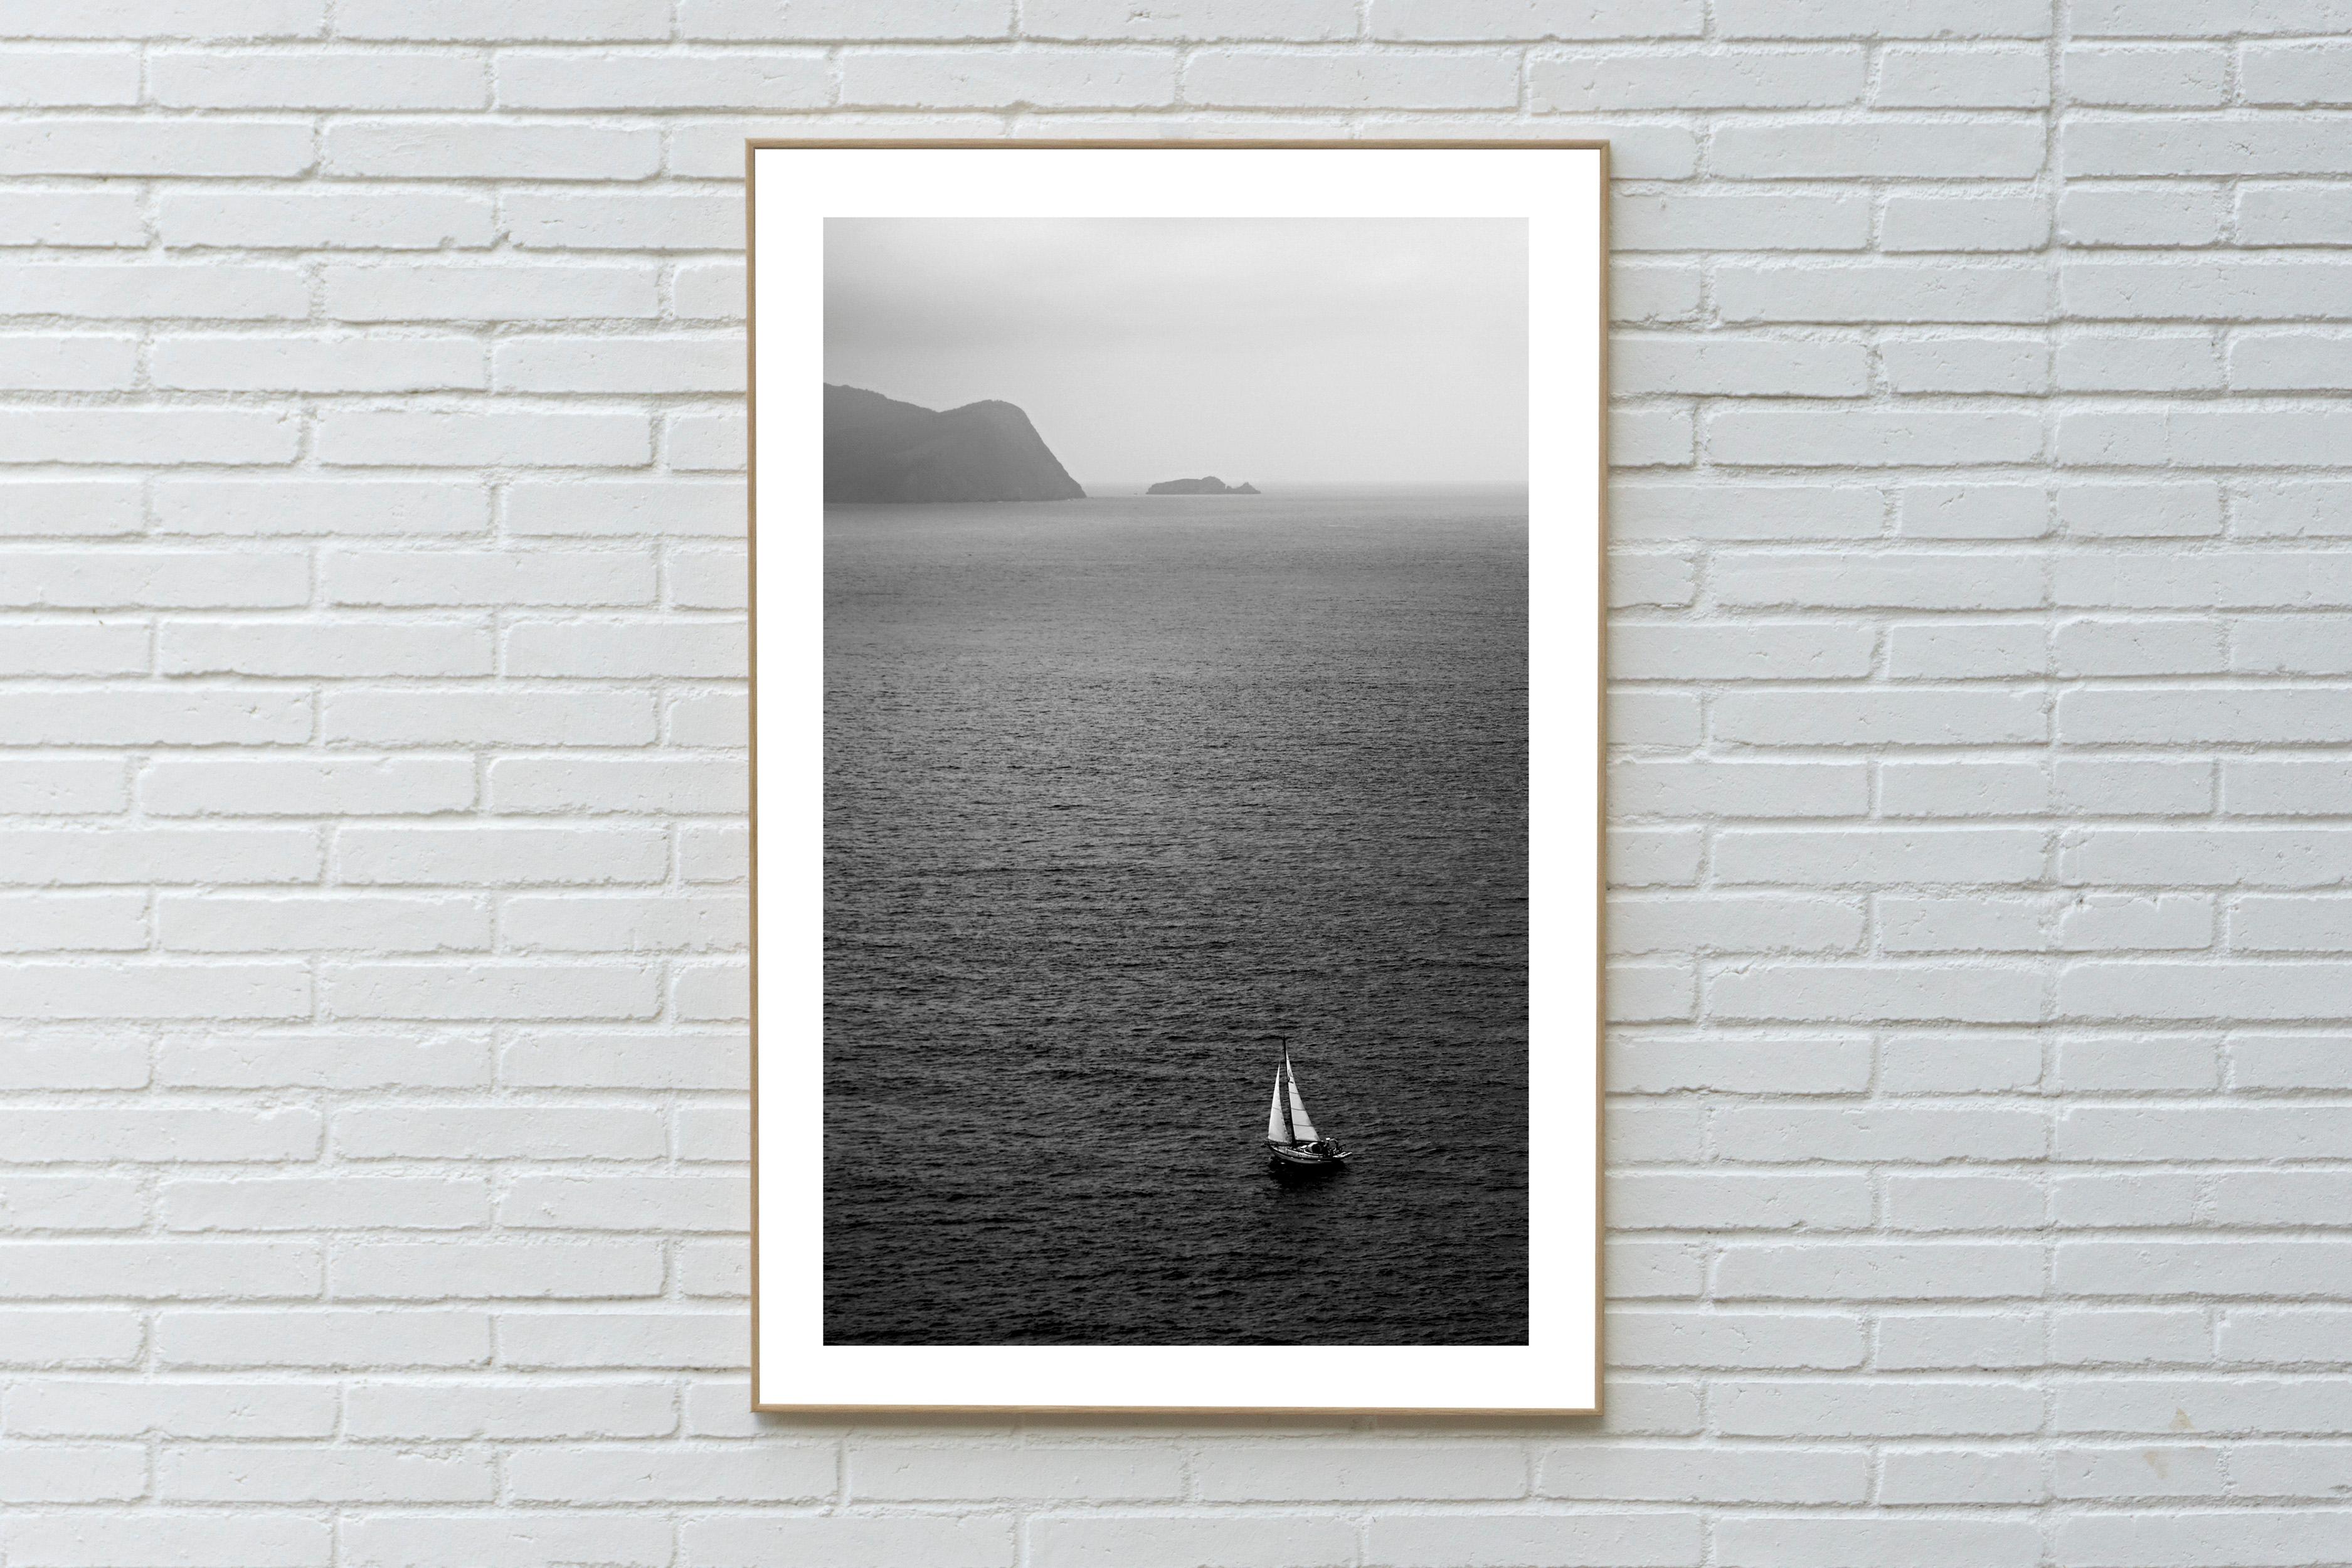  Black and White Misty Sailboat Journey, Regatta Seascape, Mediterranean Coast - Photograph by Kind of Cyan